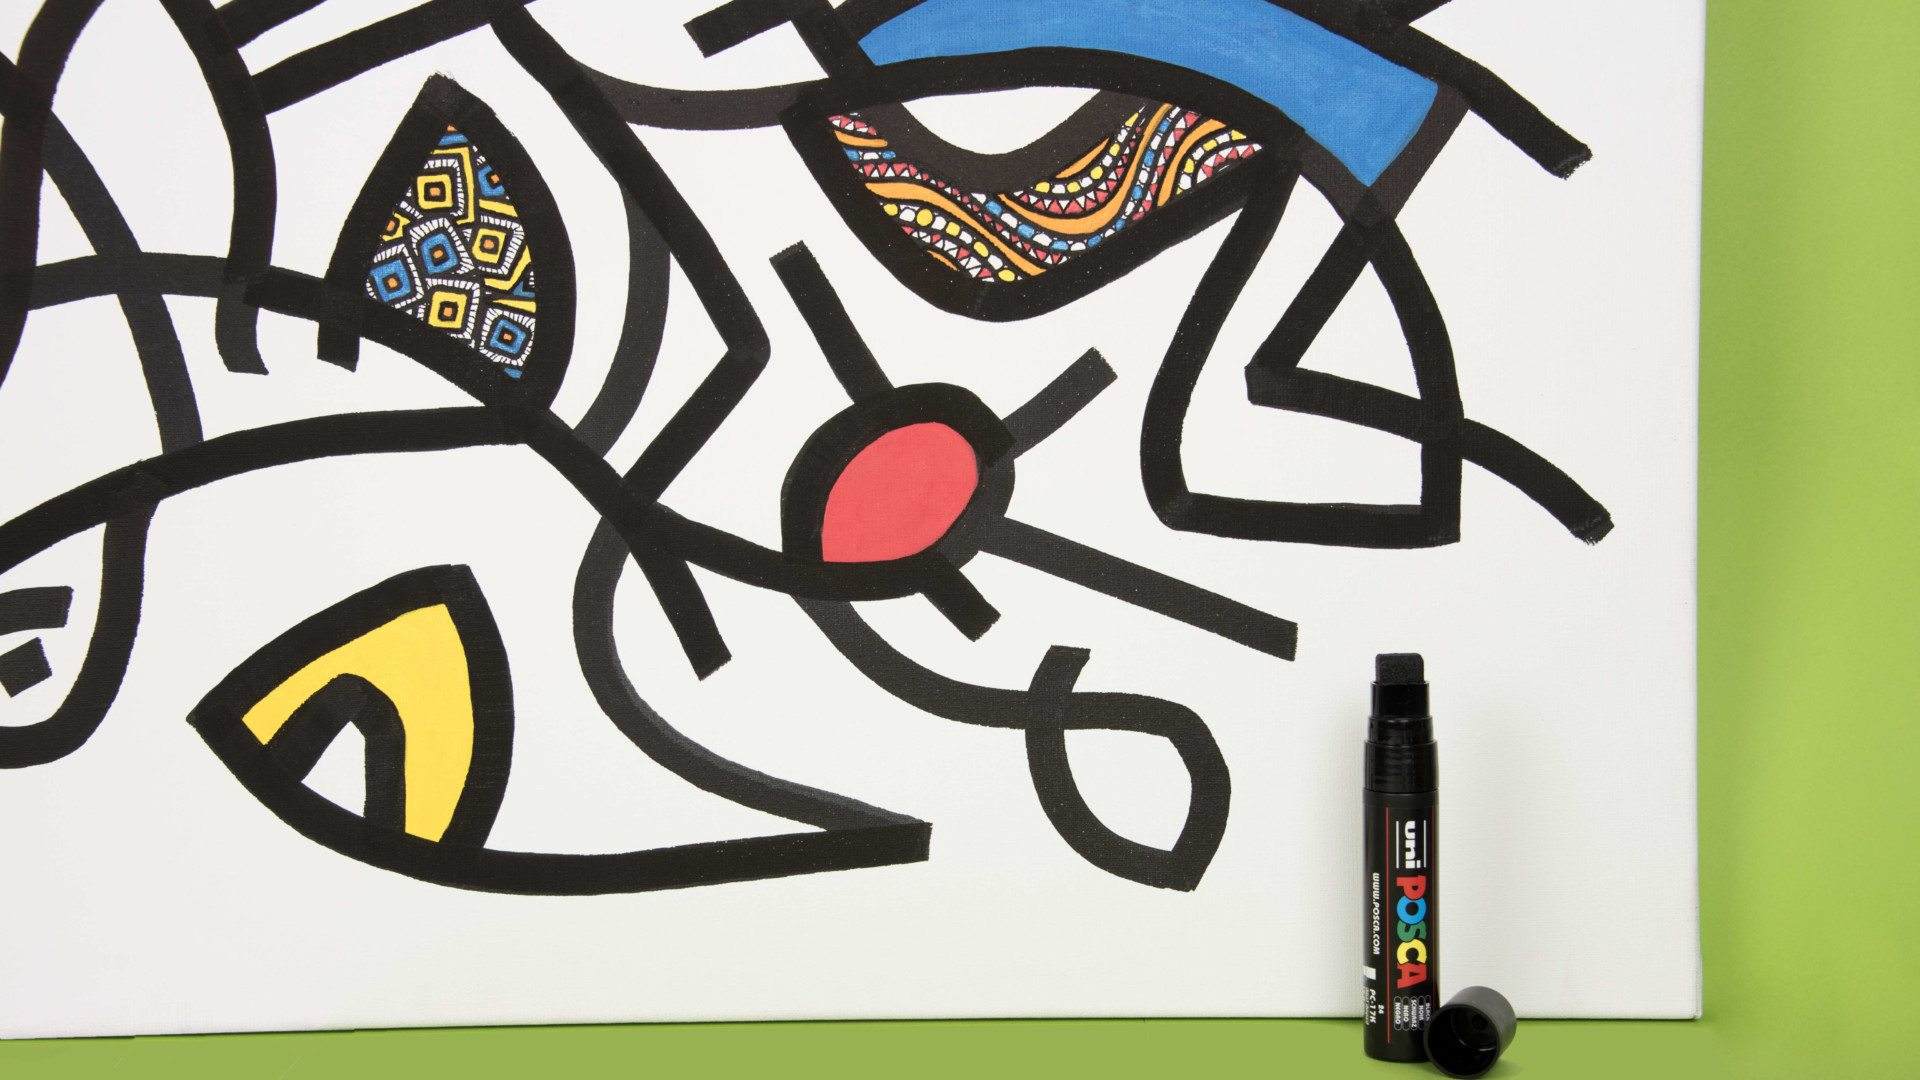 Posca Pen Art: Discover What You Can Create